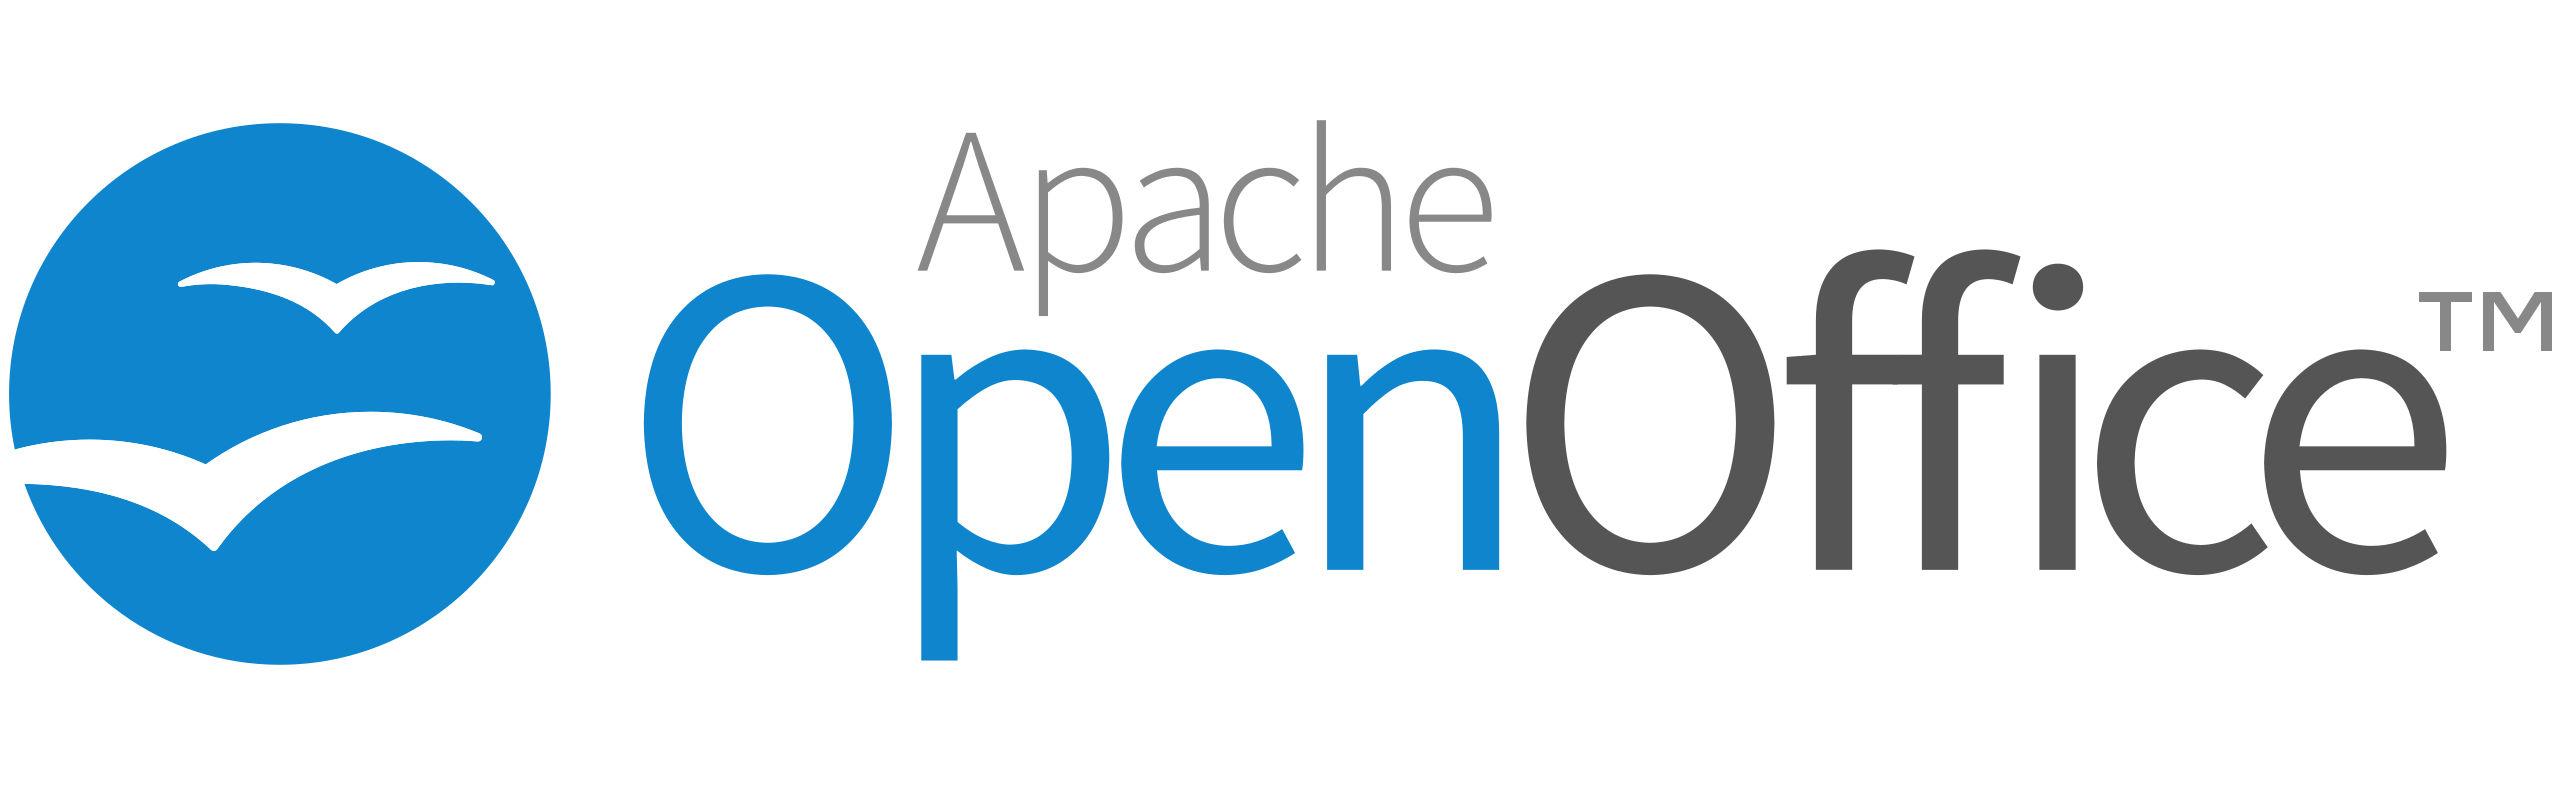 Apache_OpenOffice_logo